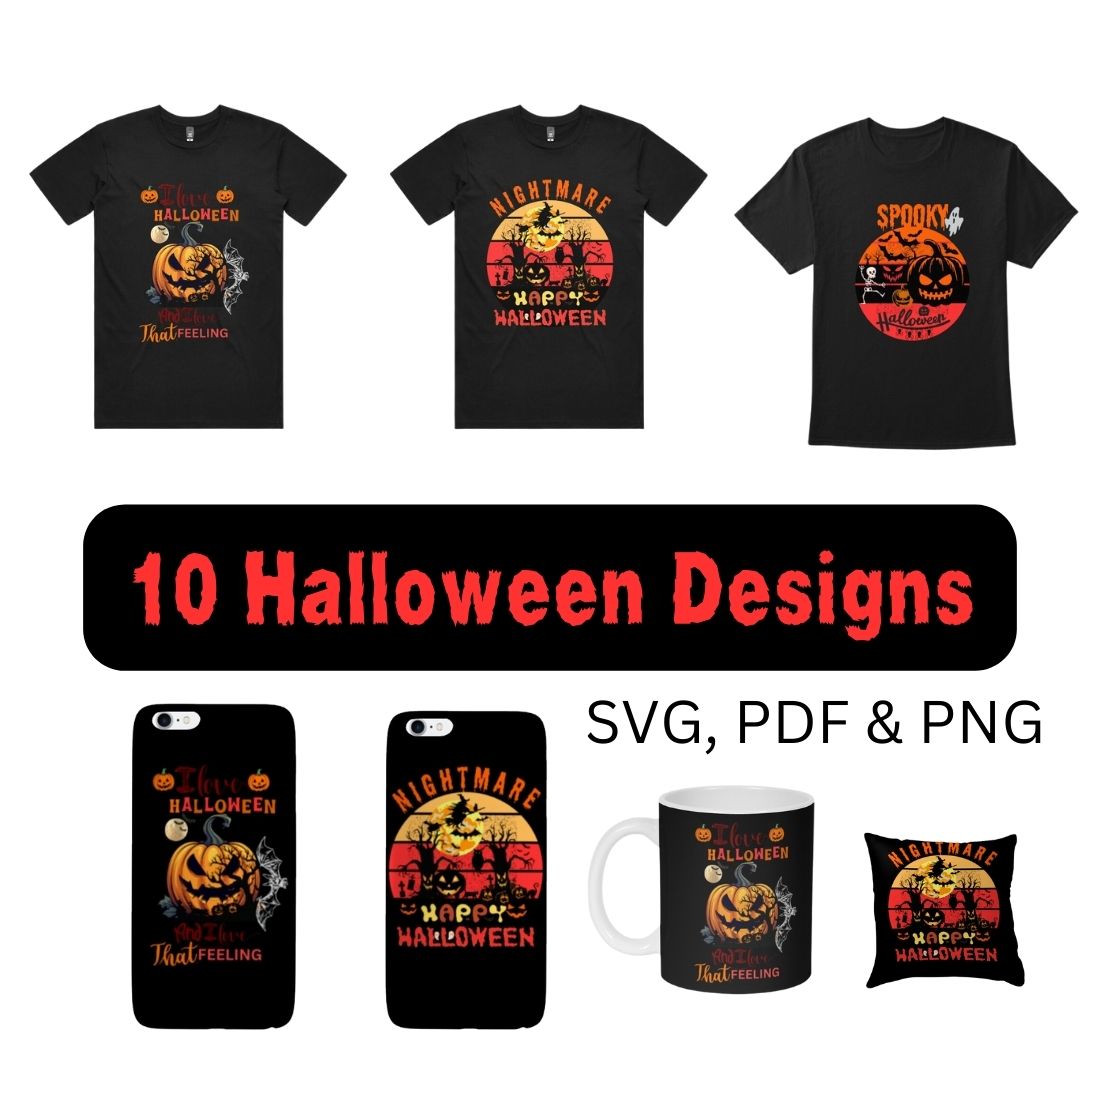 Spooky, Halloween 10 Designs Bundle preview image.